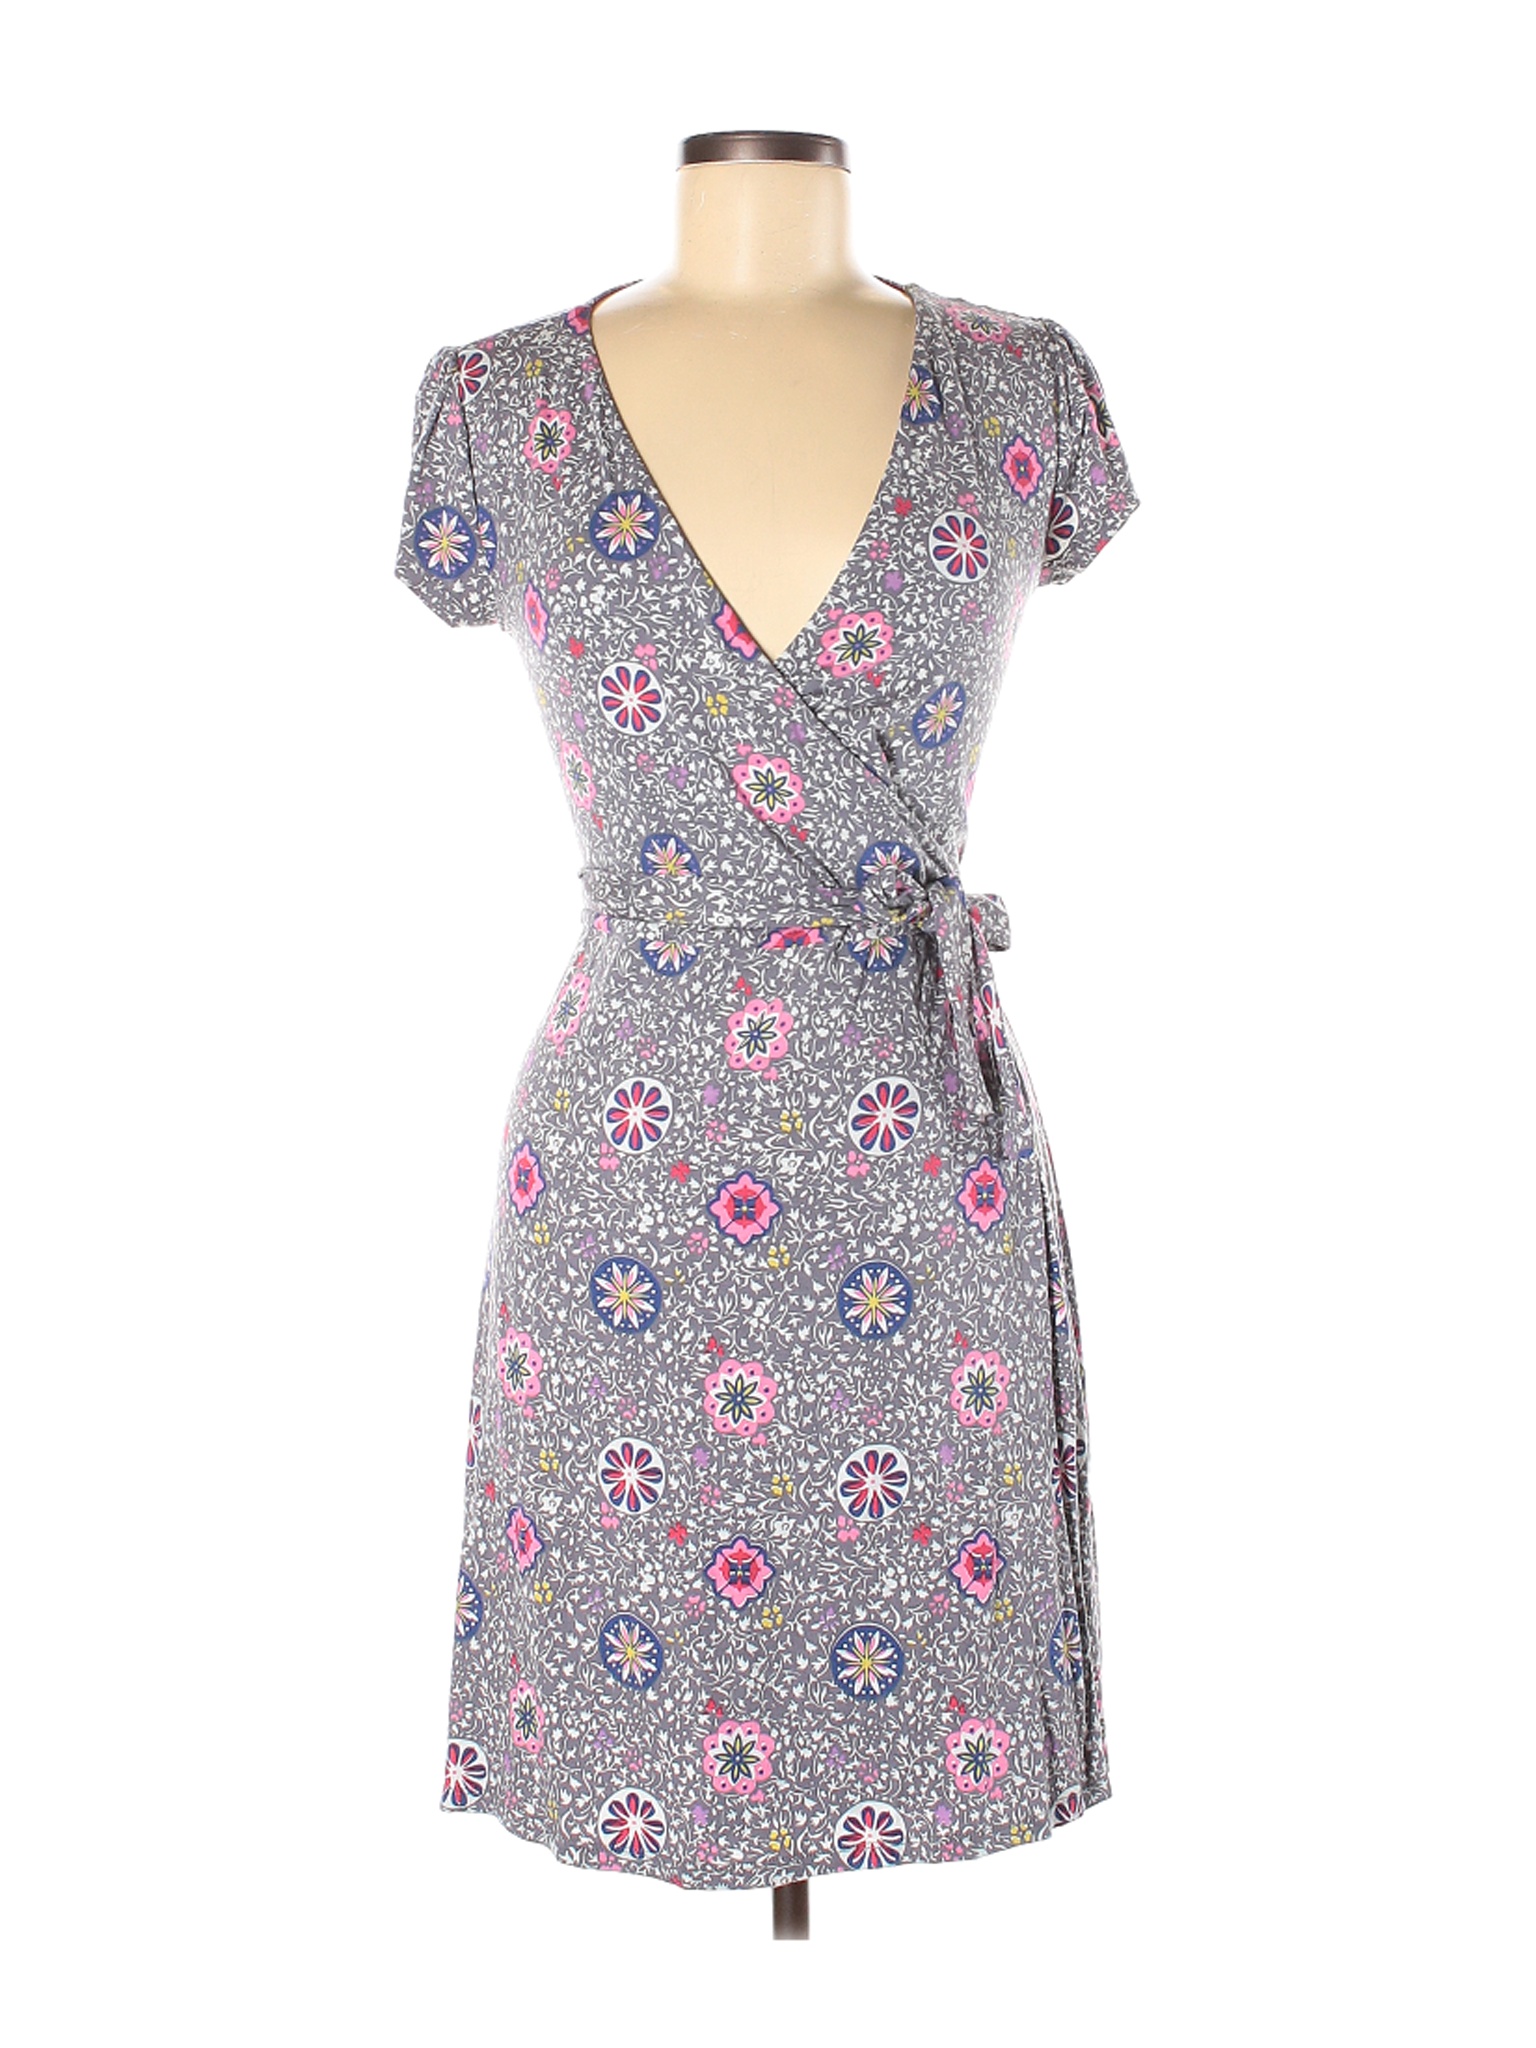 Boden Women Gray Casual Dress 6 Petites | eBay